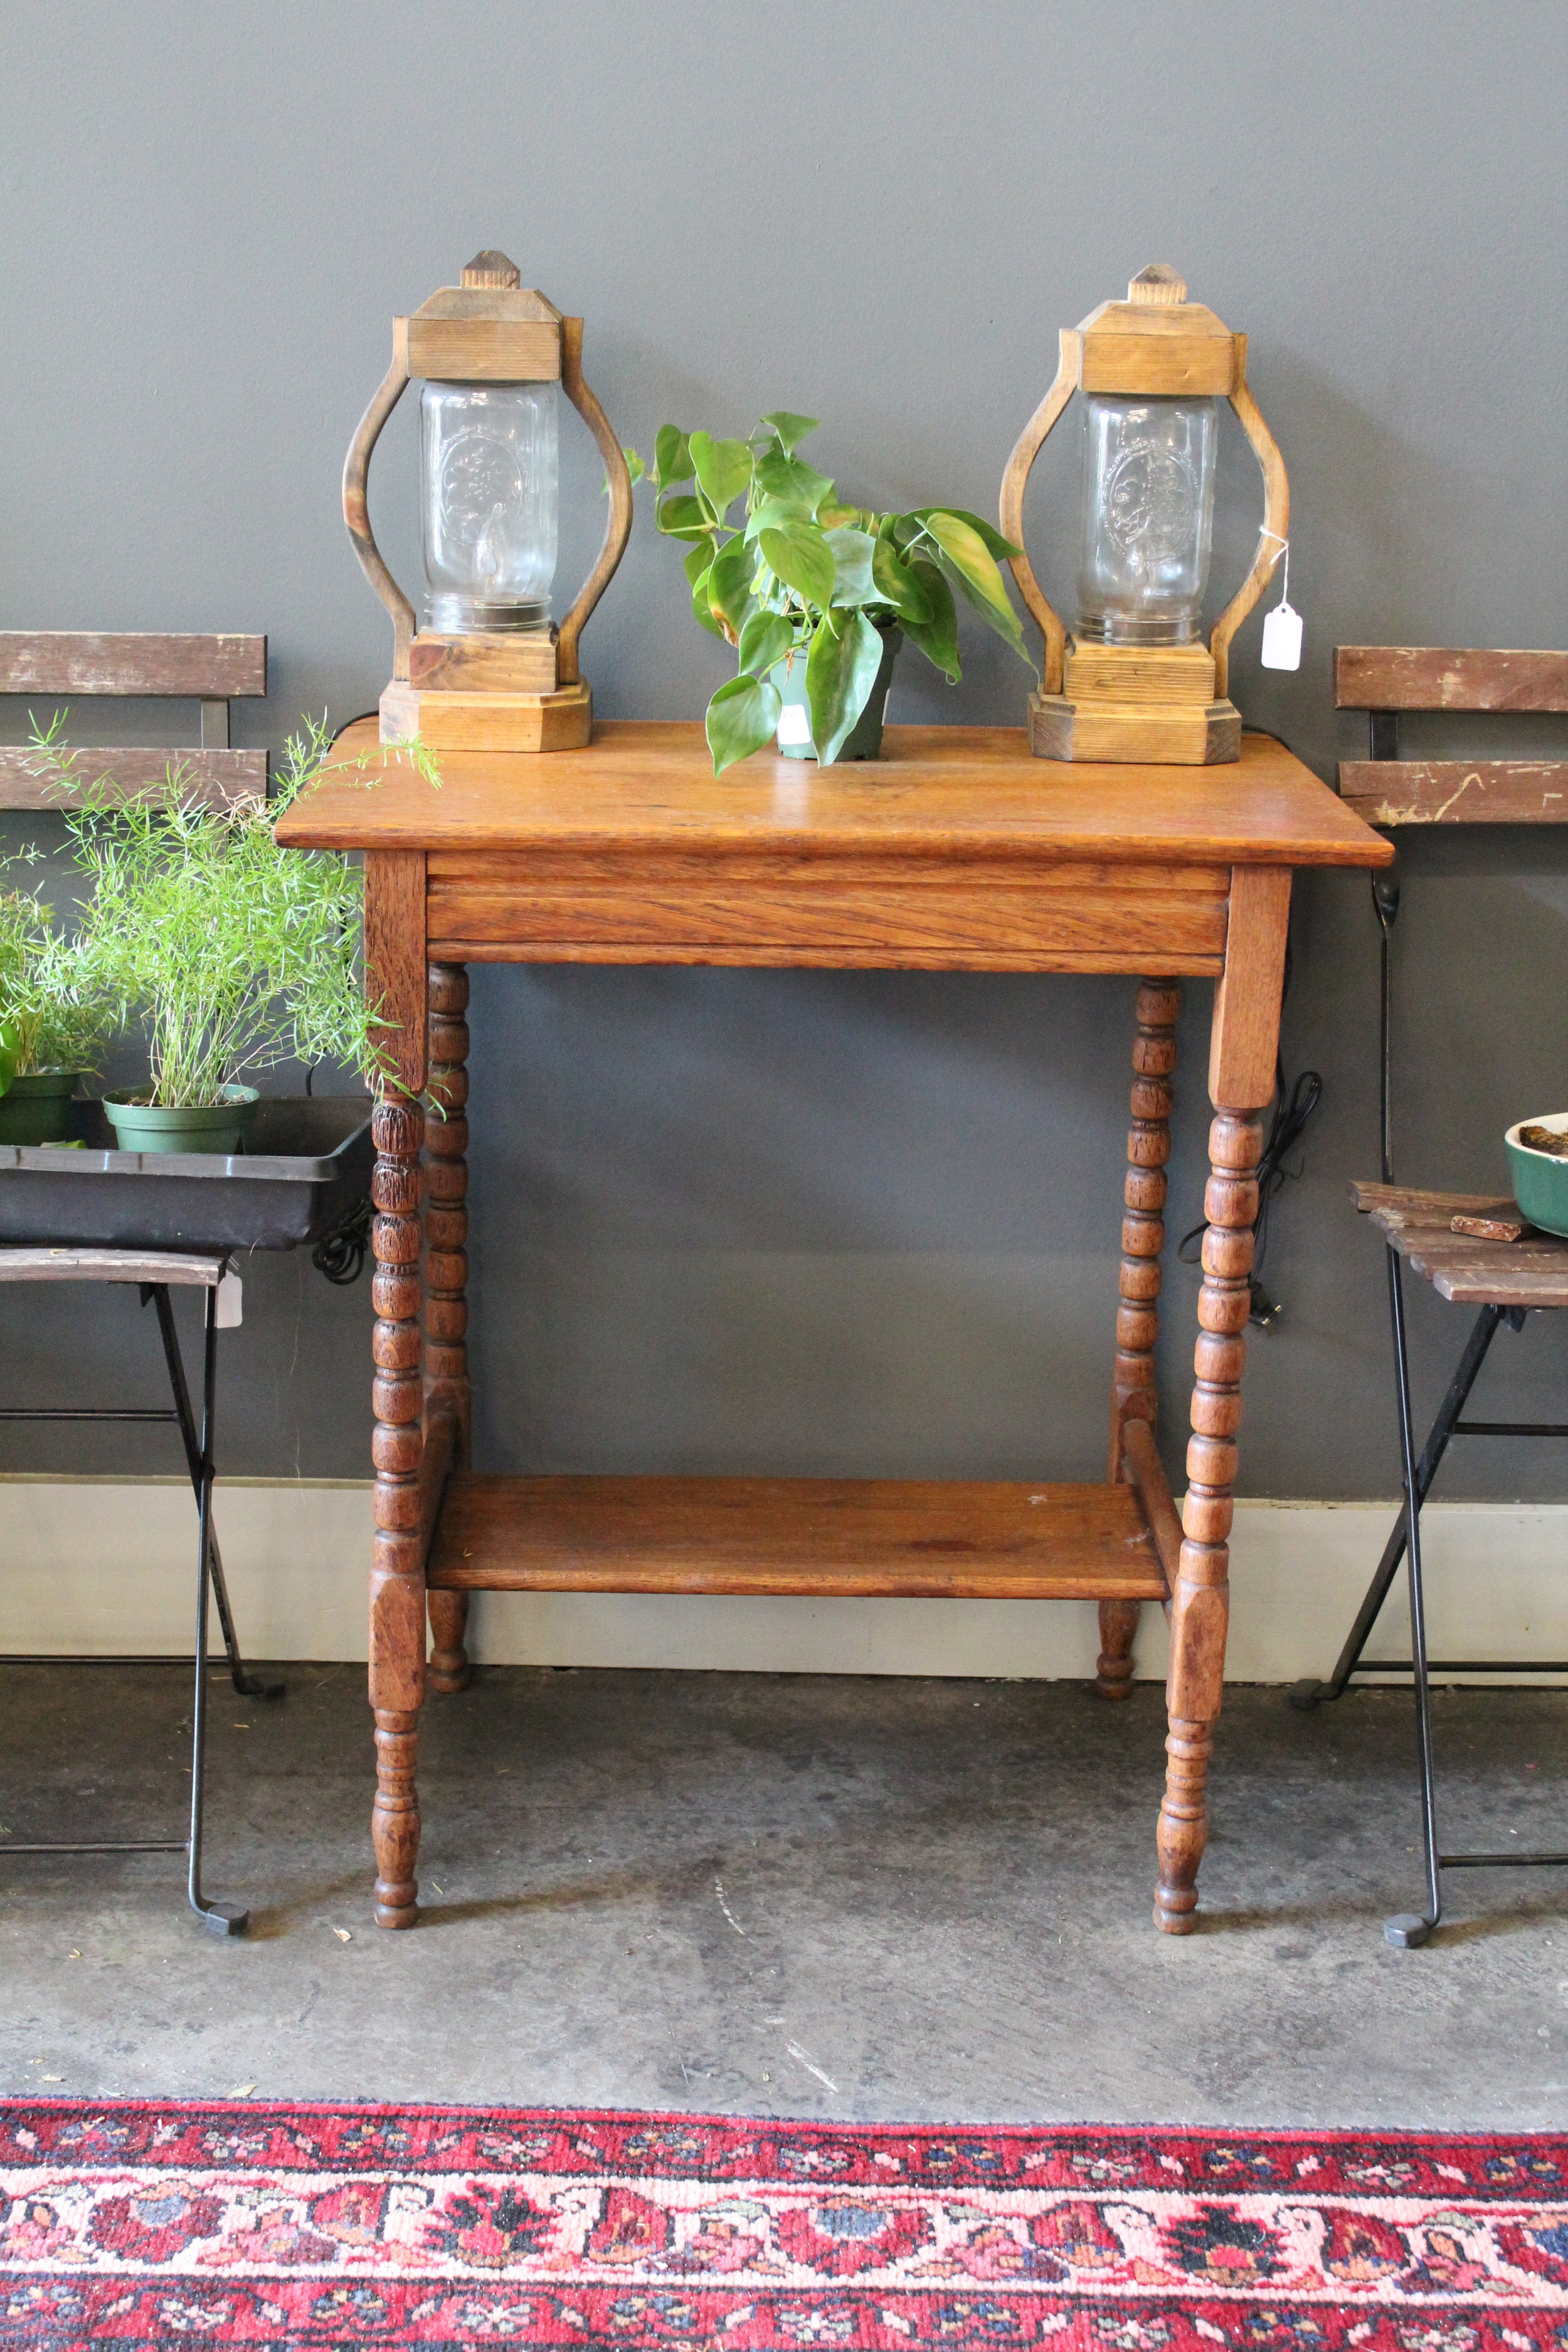 Wooden Side Table and Mason Jar Lanterns